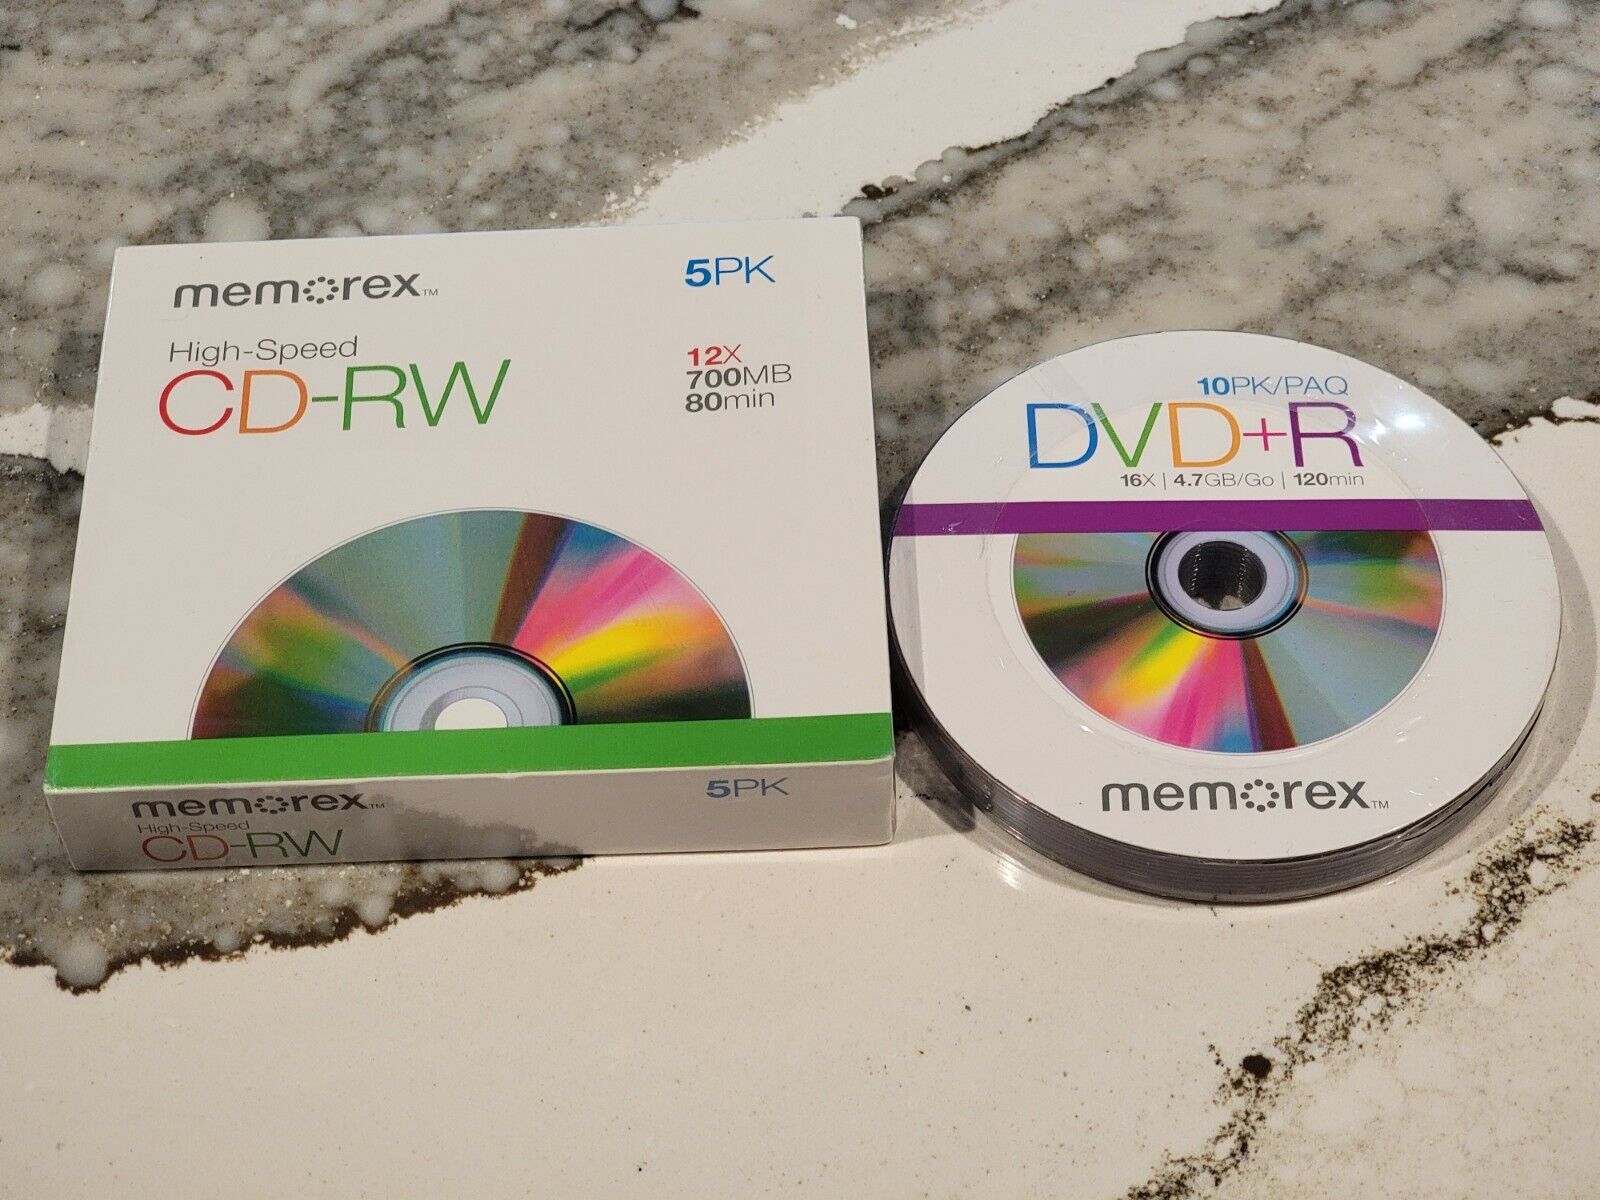 ALL Brand New Memorex DVD-R 10 PK 16x 4.7 GB 120 Min AND Brand New 5PK CD-RW LOT